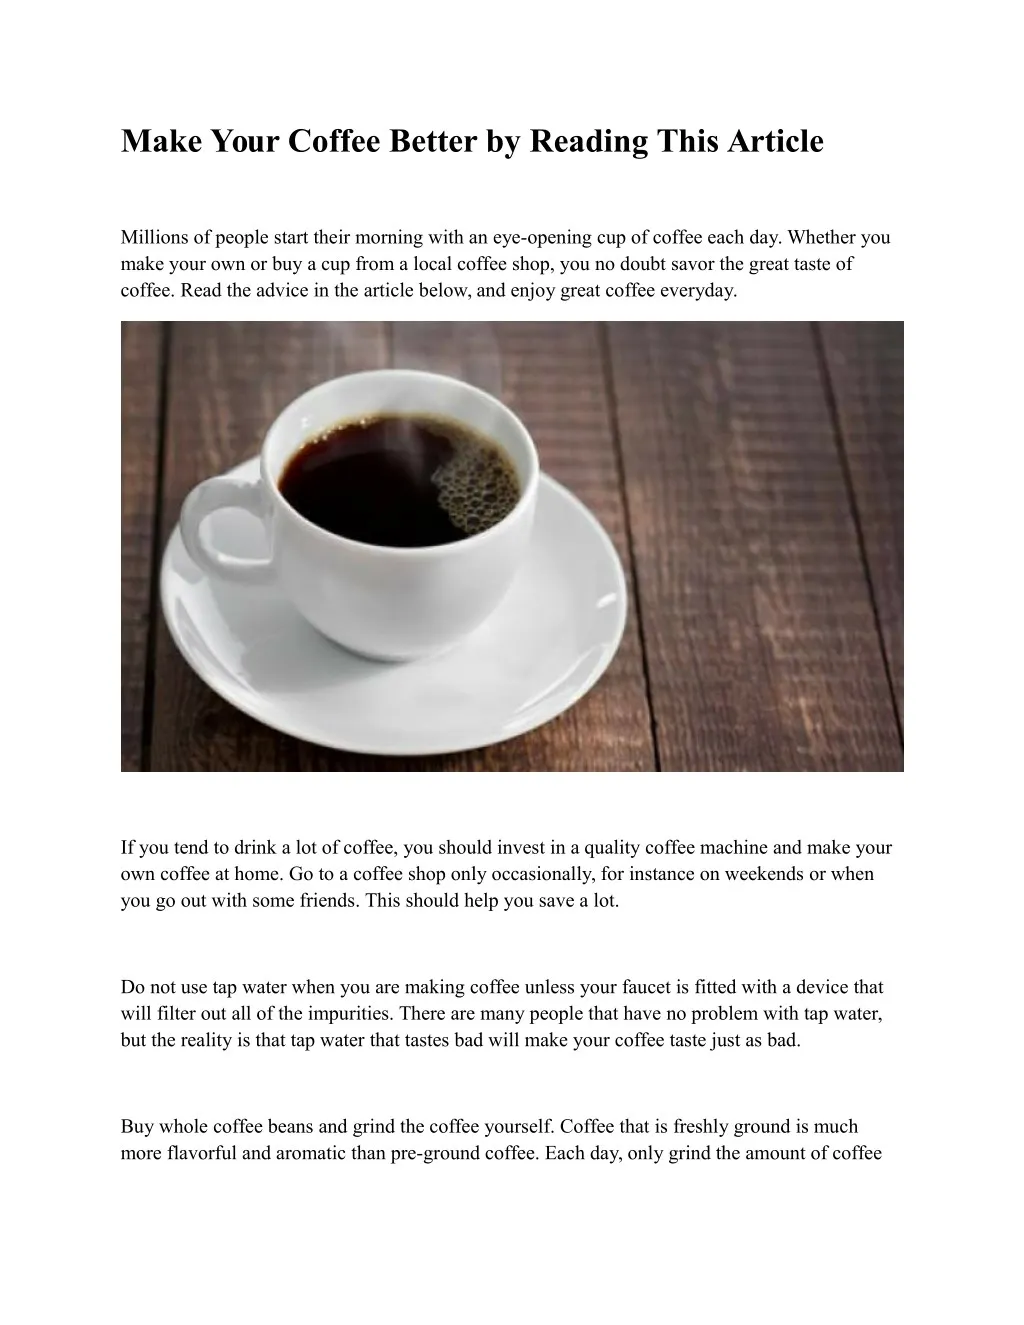 https://cdn4.slideserve.com/7631953/make-your-coffee-better-by-reading-this-article-n.jpg